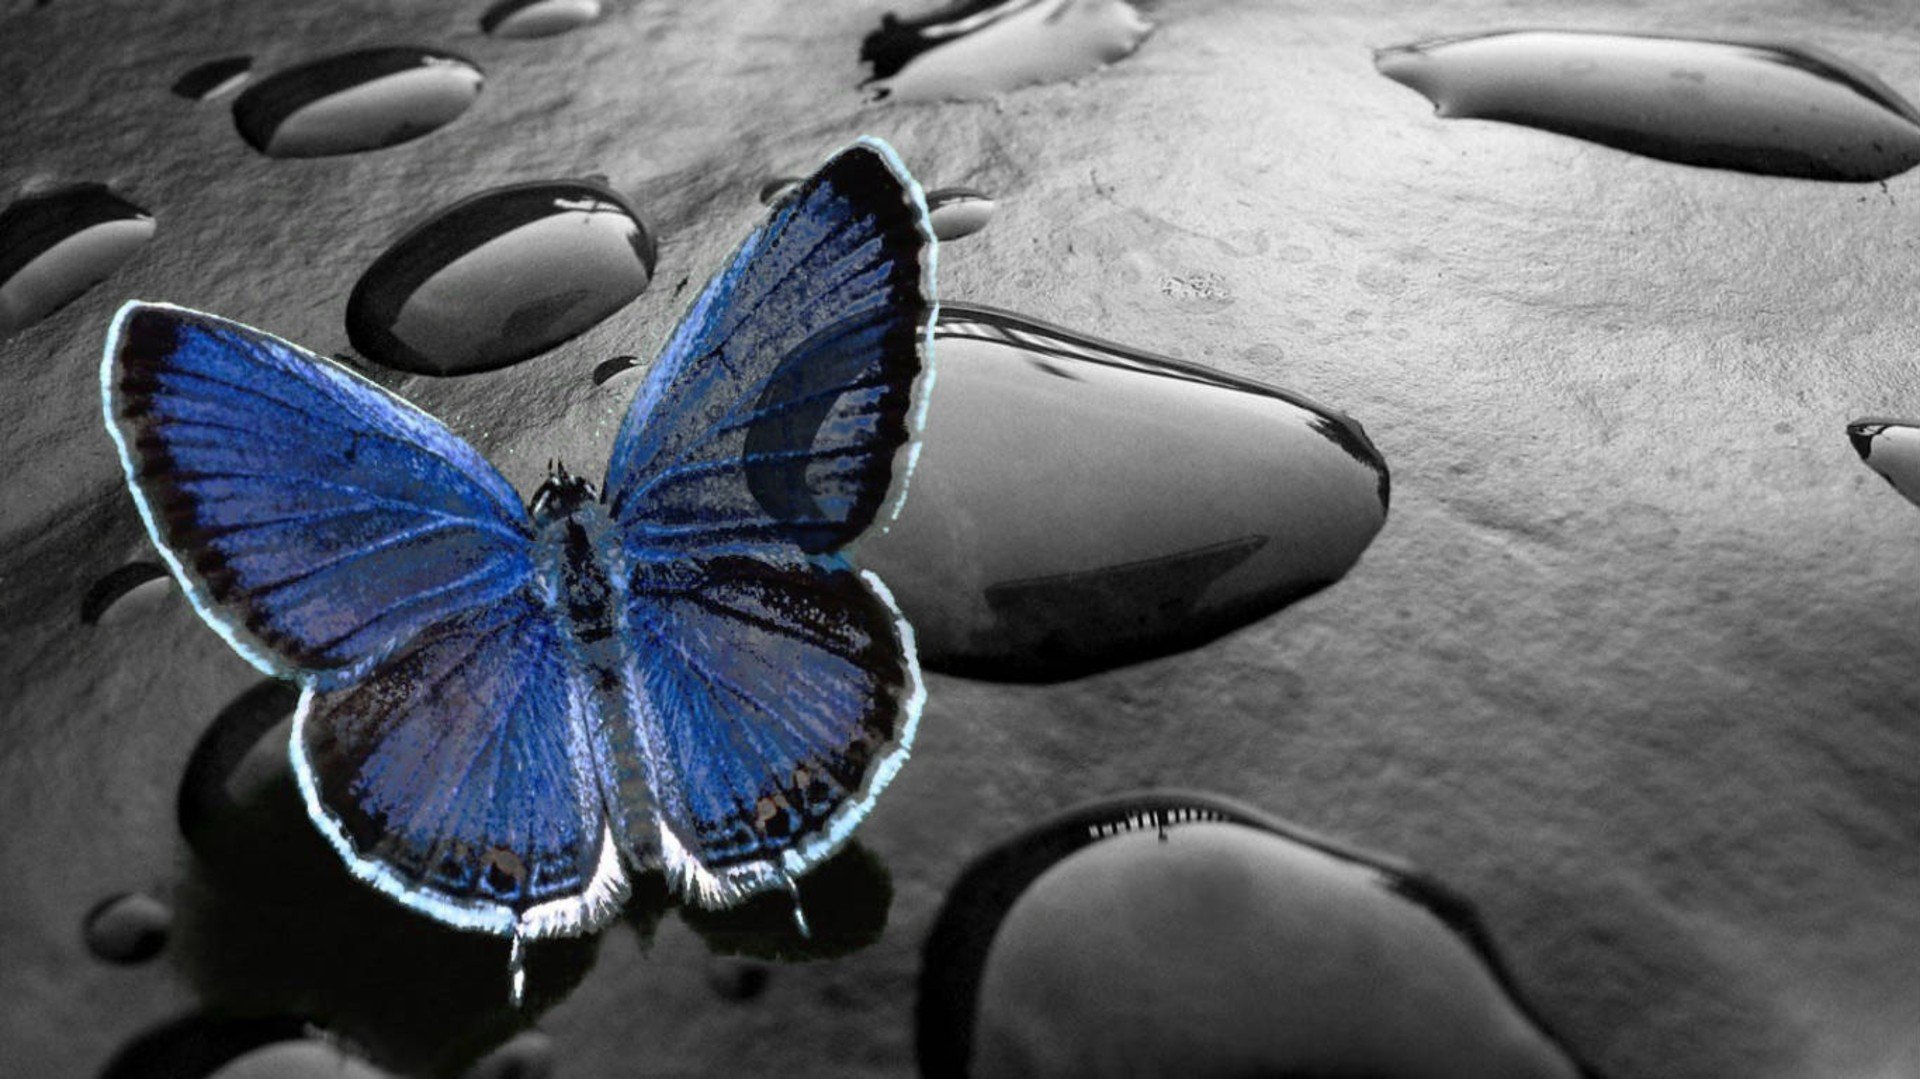 Обои на рабочий экран андроид. Картинки на рабочий стол бабочки. Заставка на телефон бабочки. Синяя бабочка. Необычные обои.